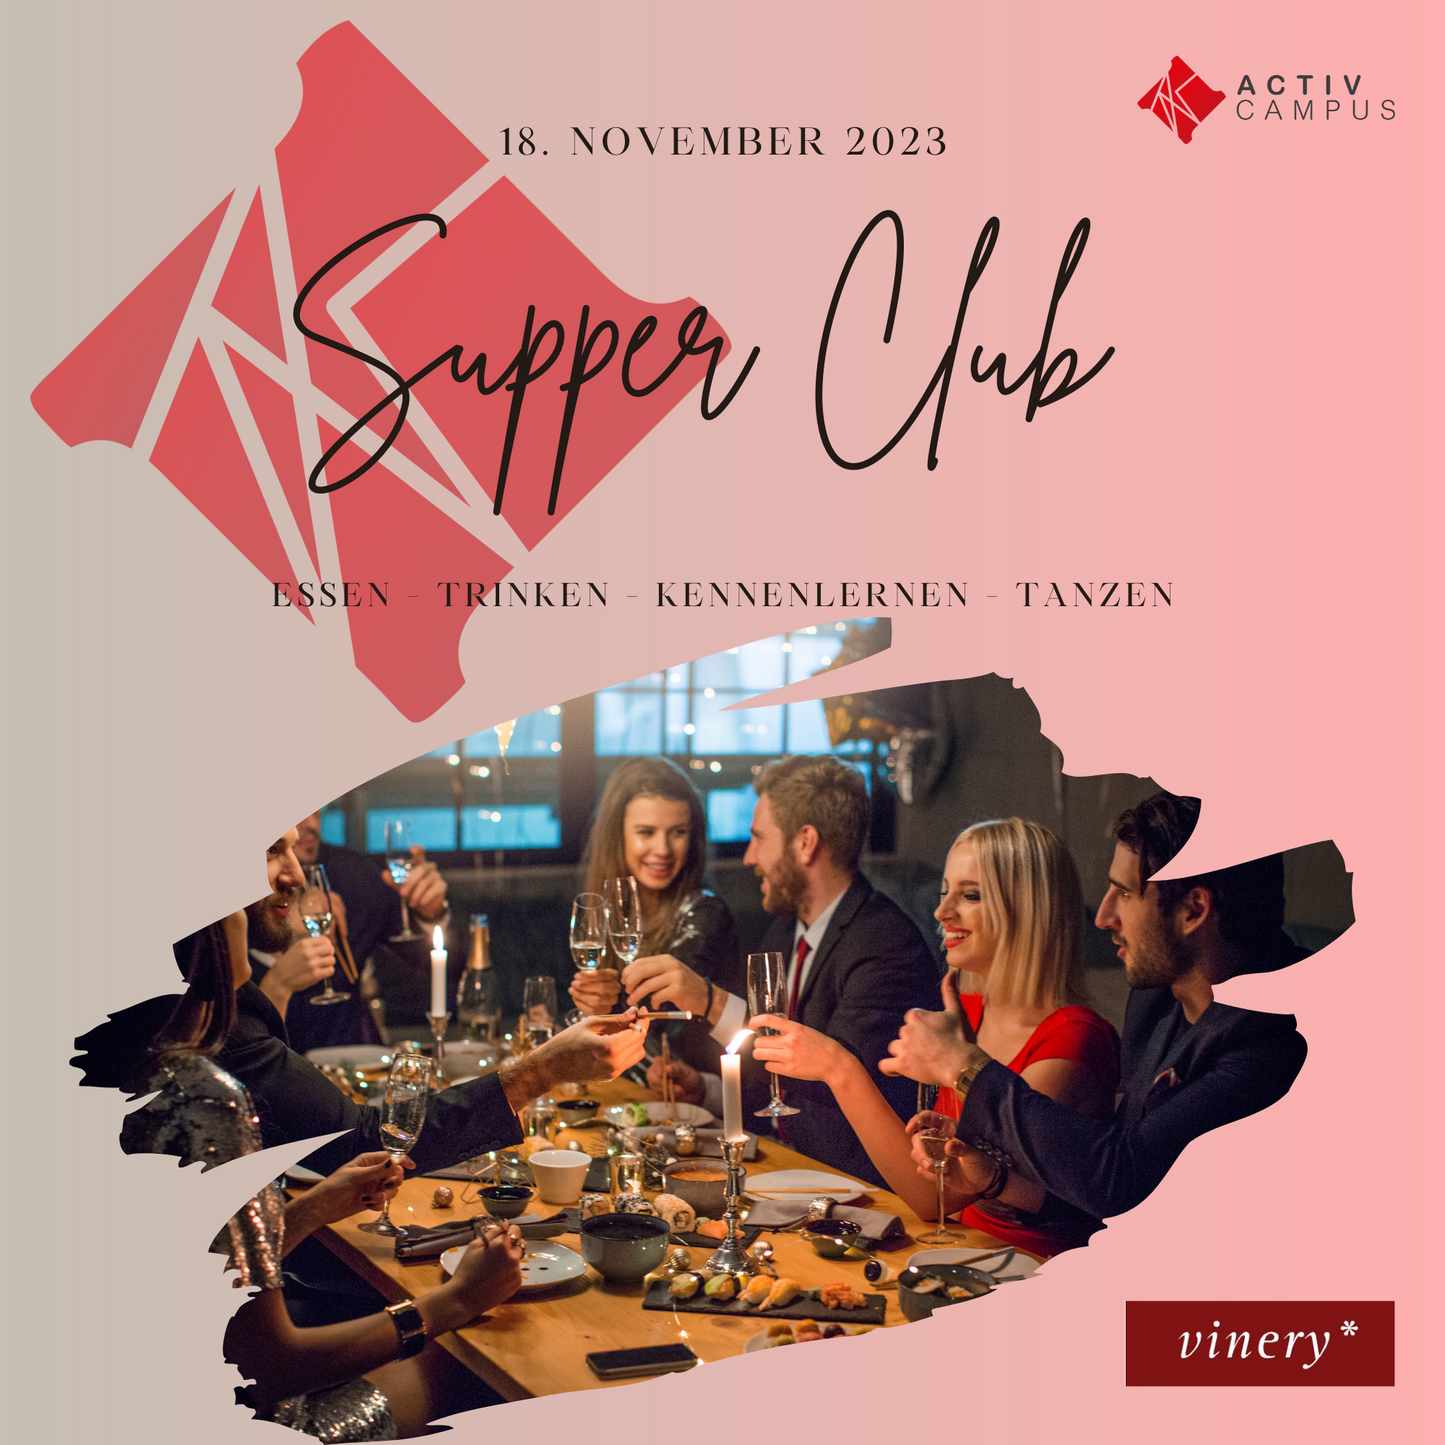 Supper Club im Activ Campus in Bochum am 18. November 2023